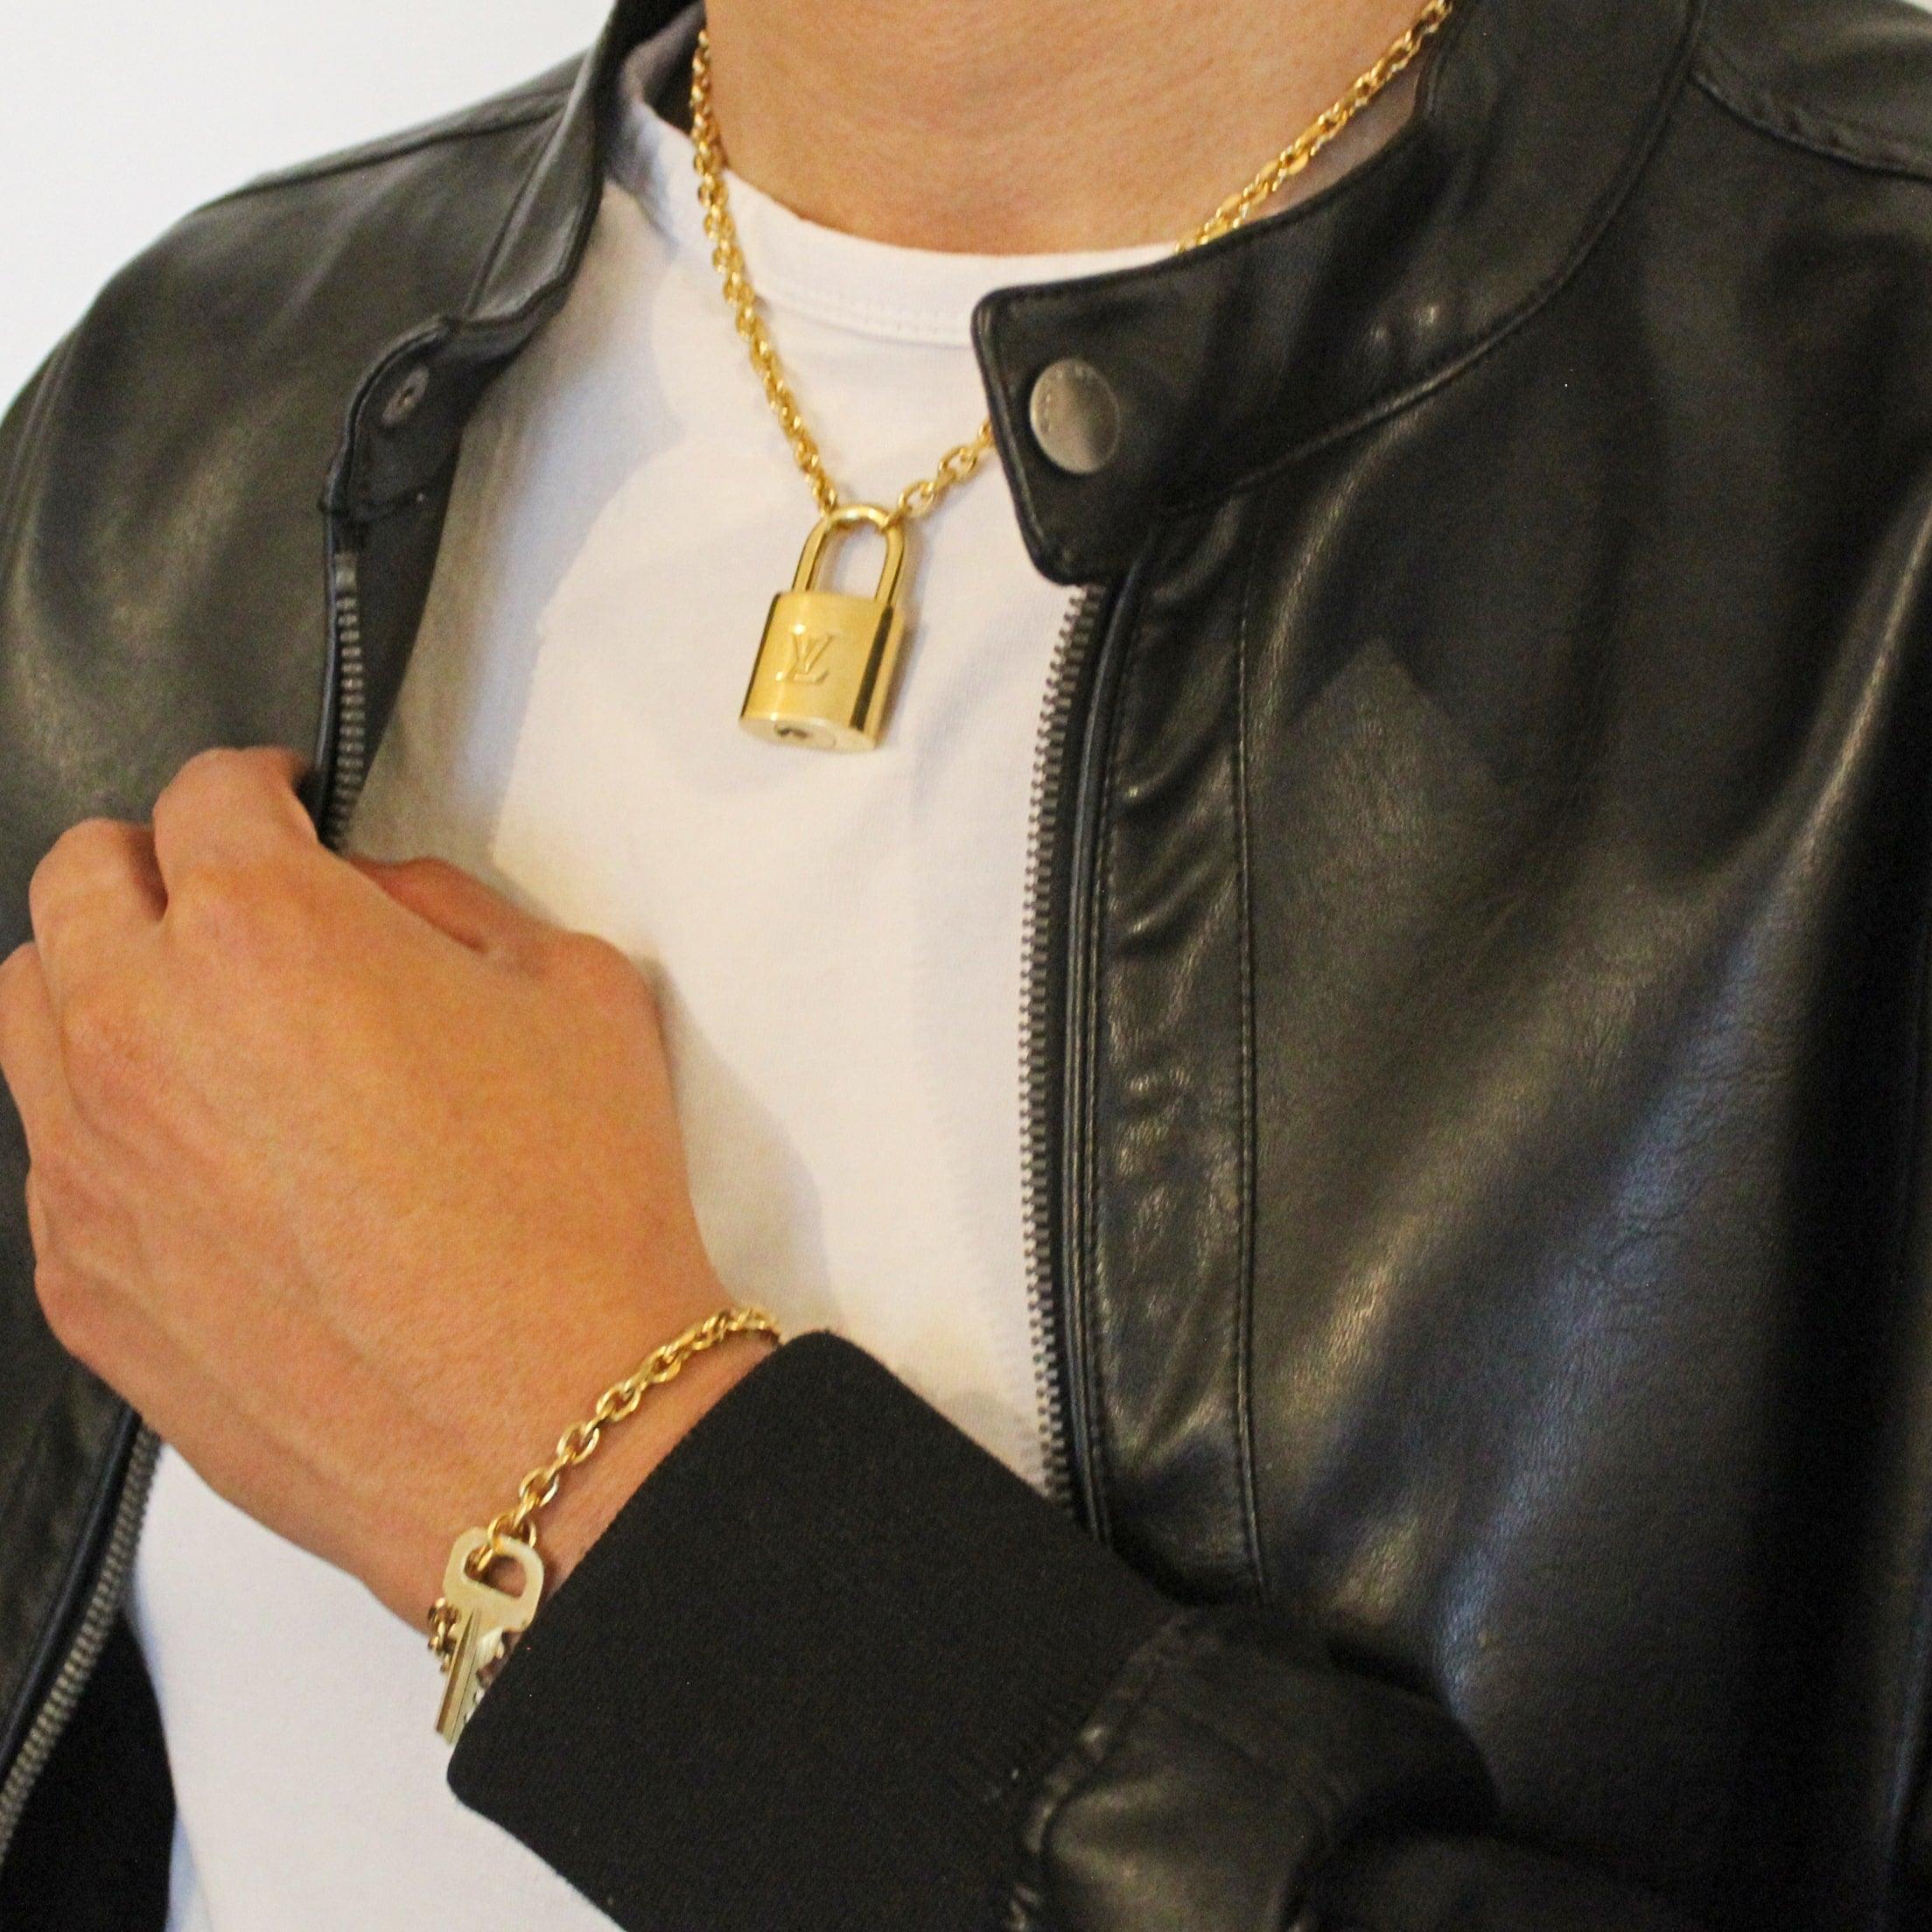 LOUIS VUITTON leather/brass lock necklace | Frankie Jo & Co.